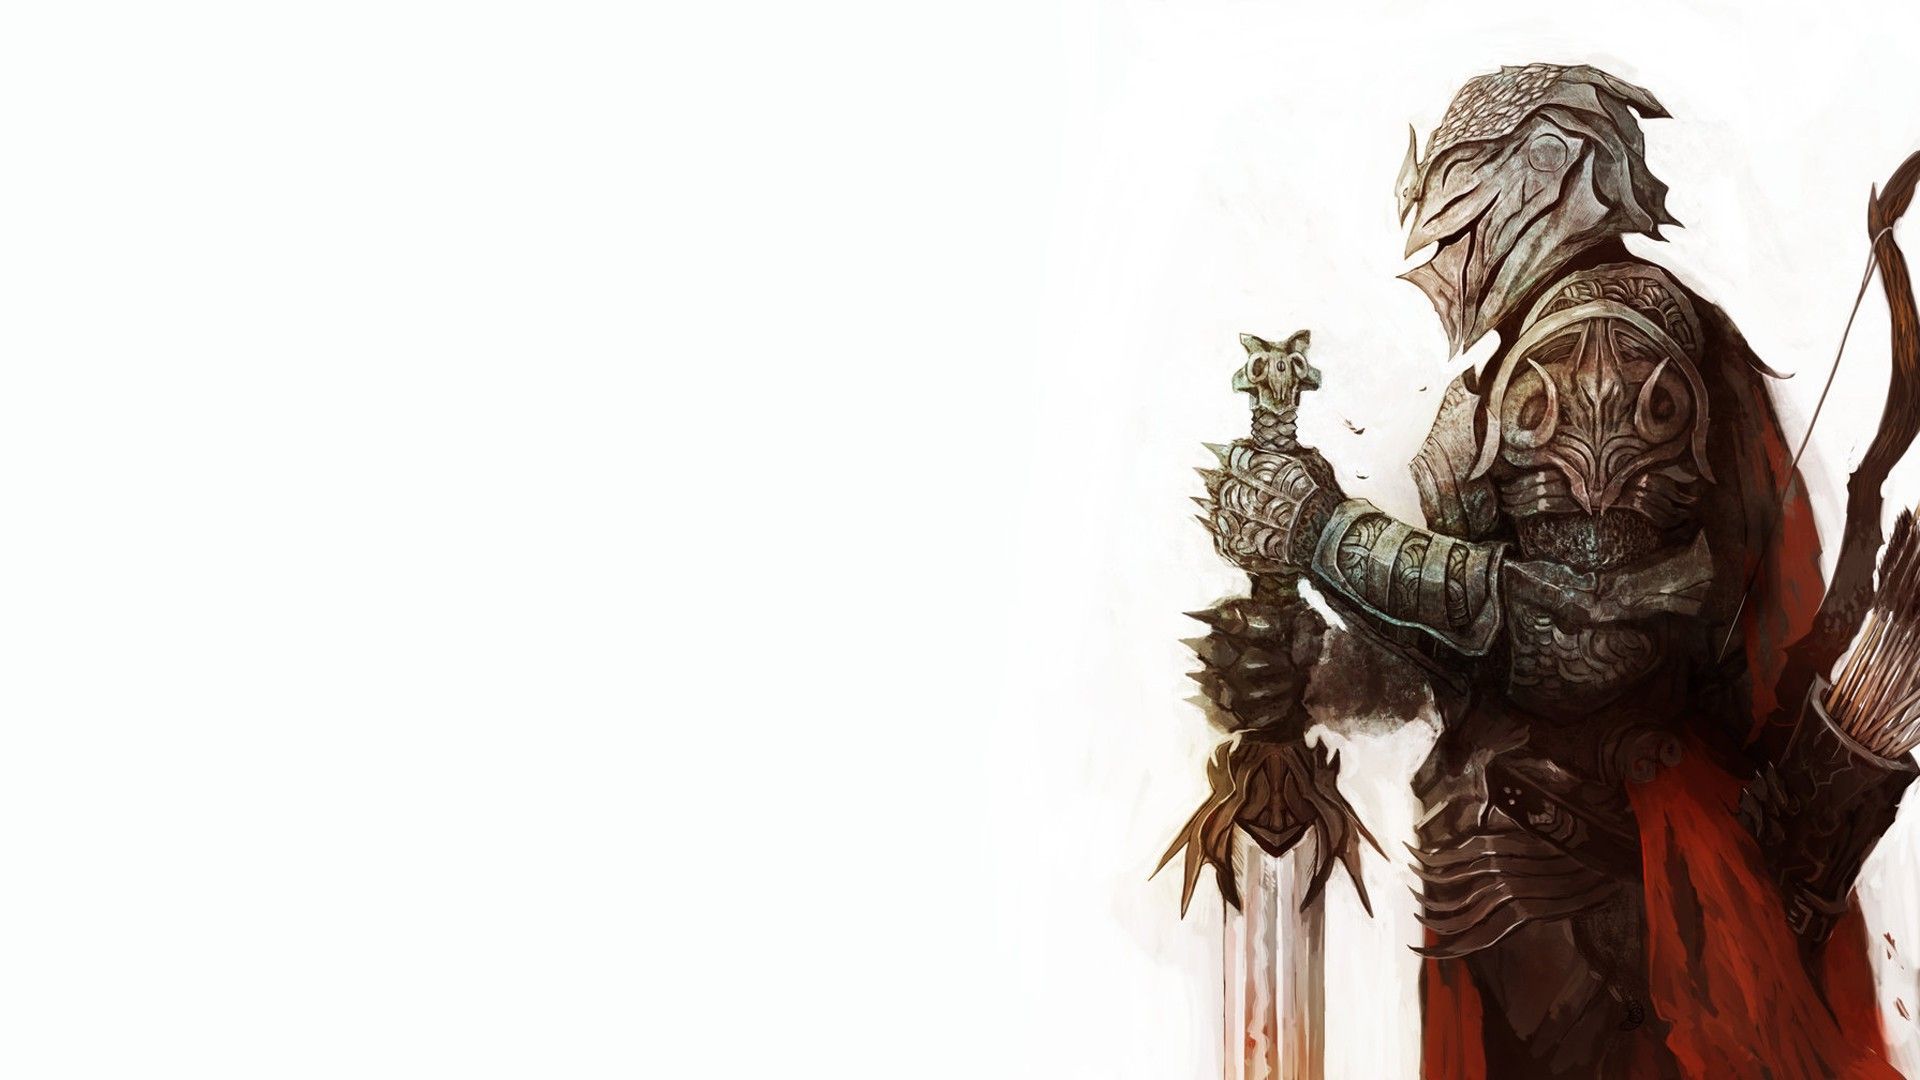 Knight holding a sword wallpaper   1070444